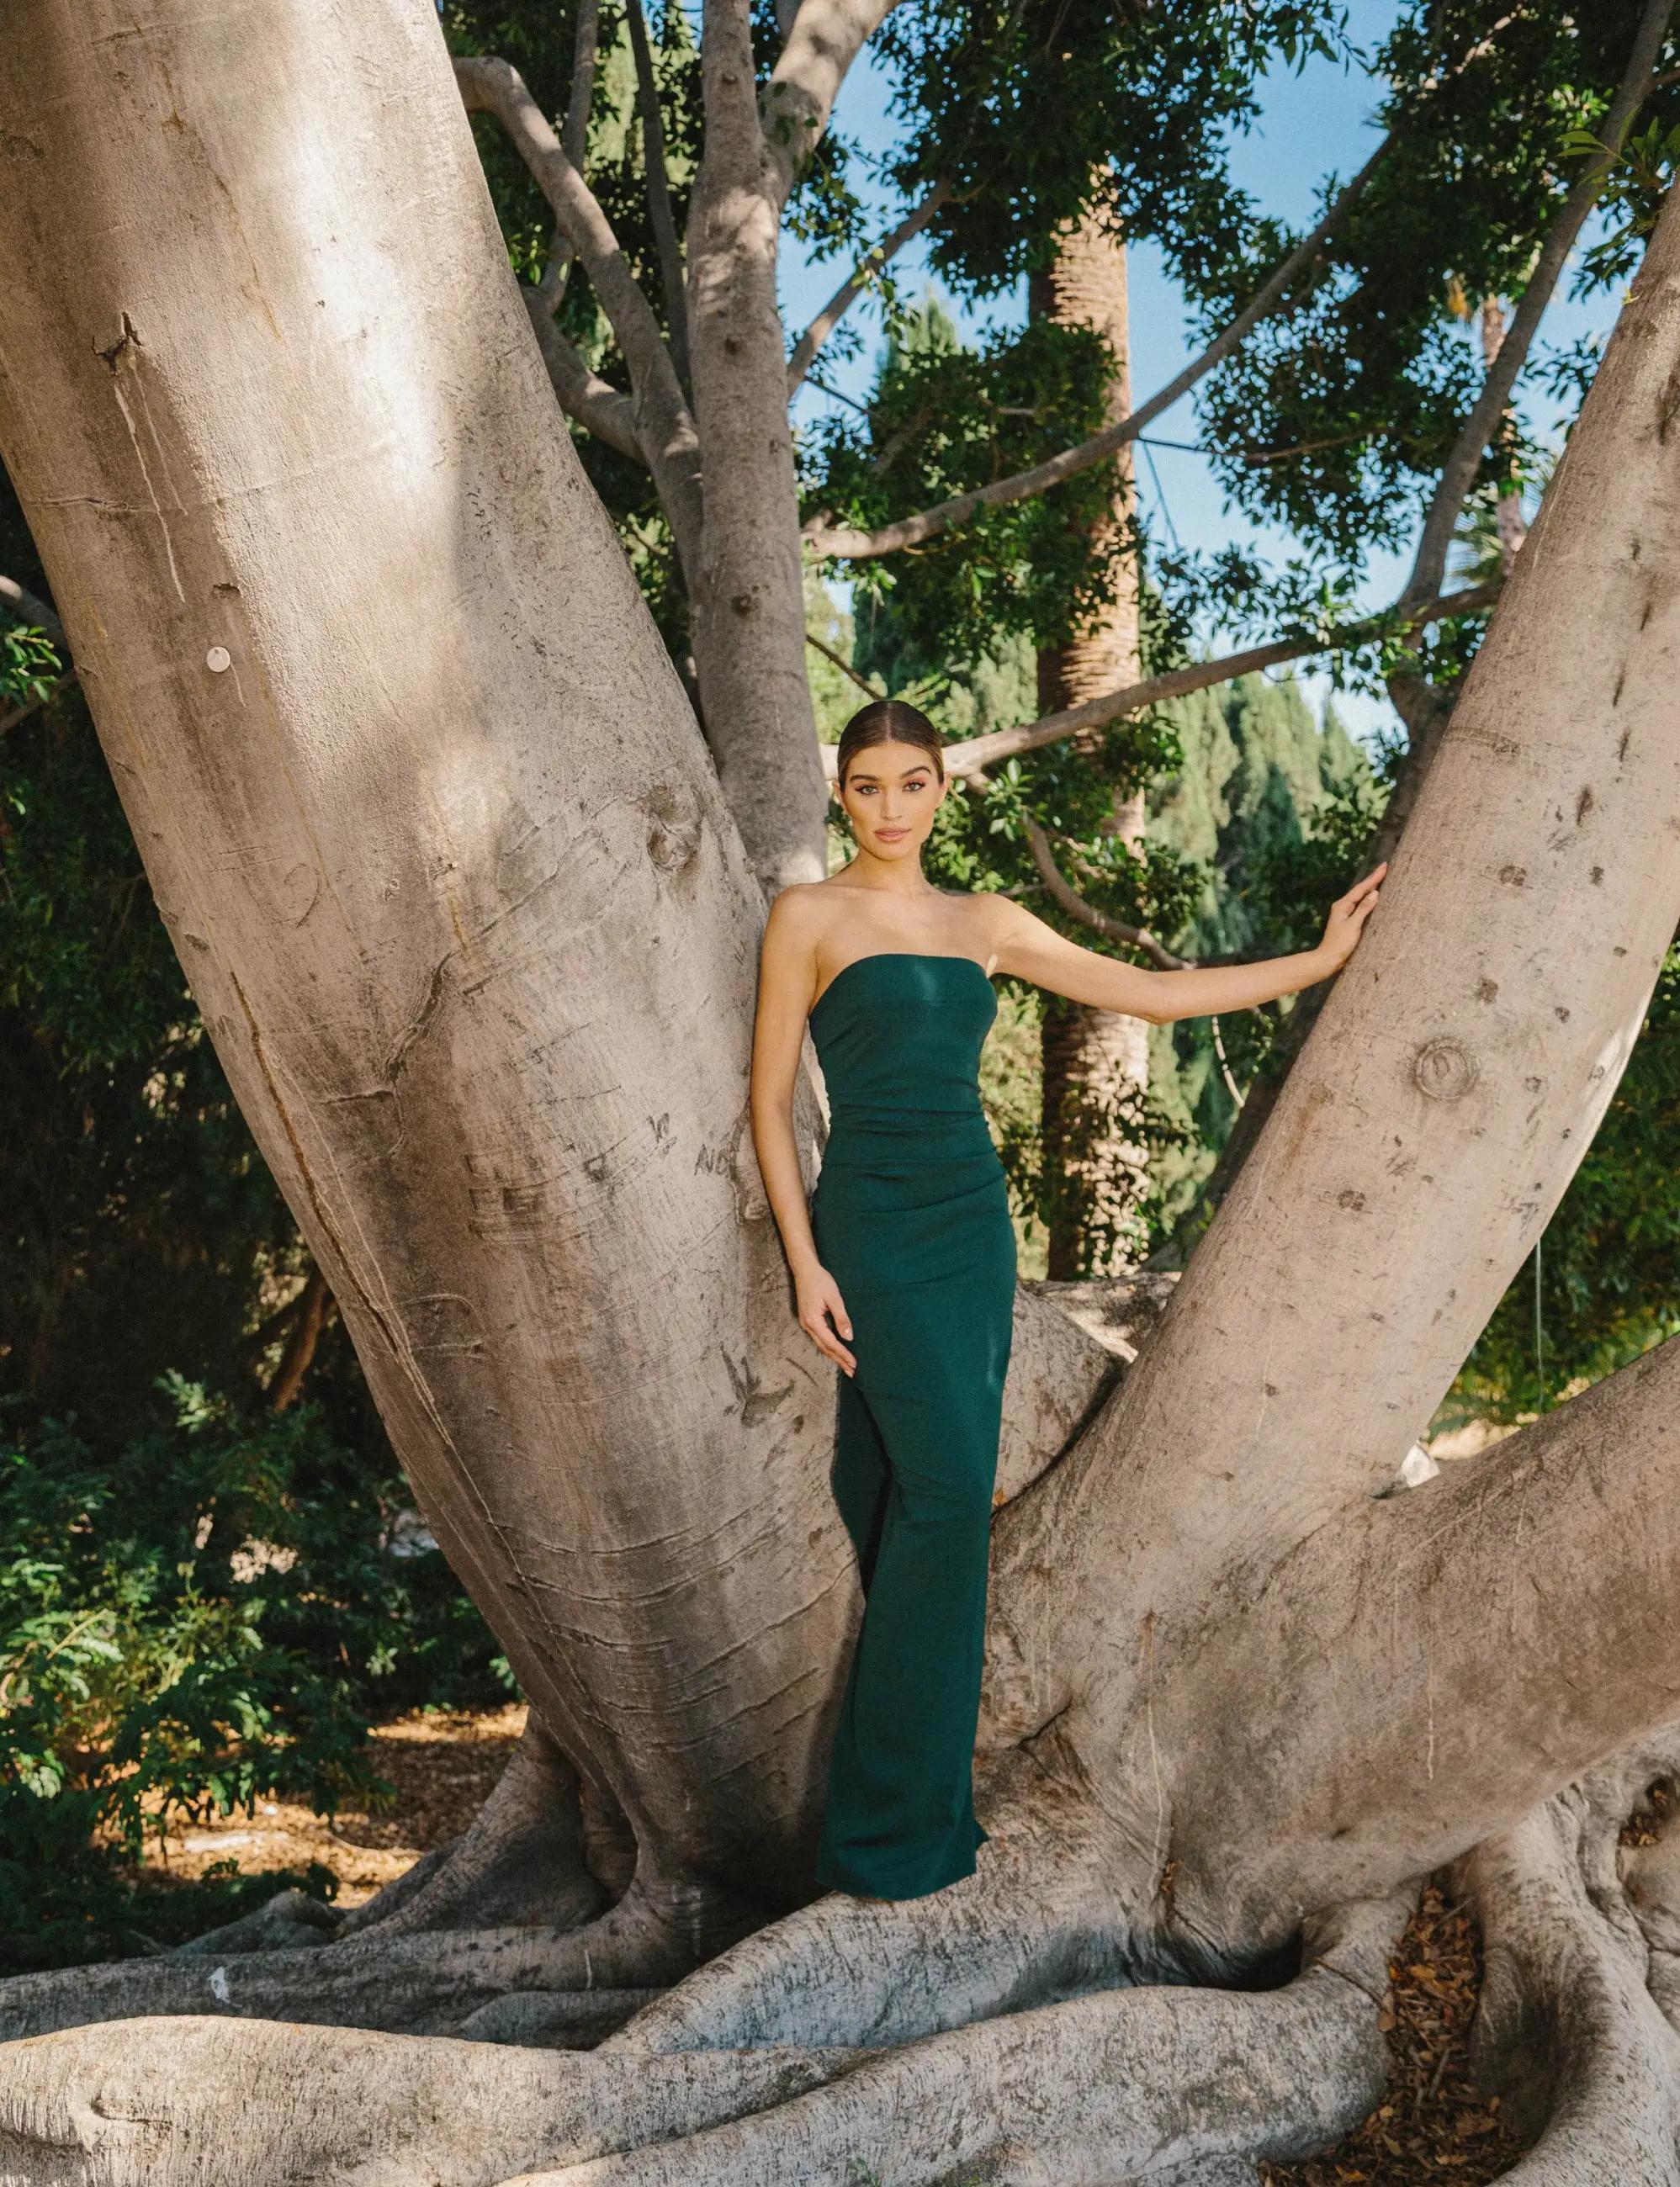 Model wearing a long dark green evening gown posing near the tree